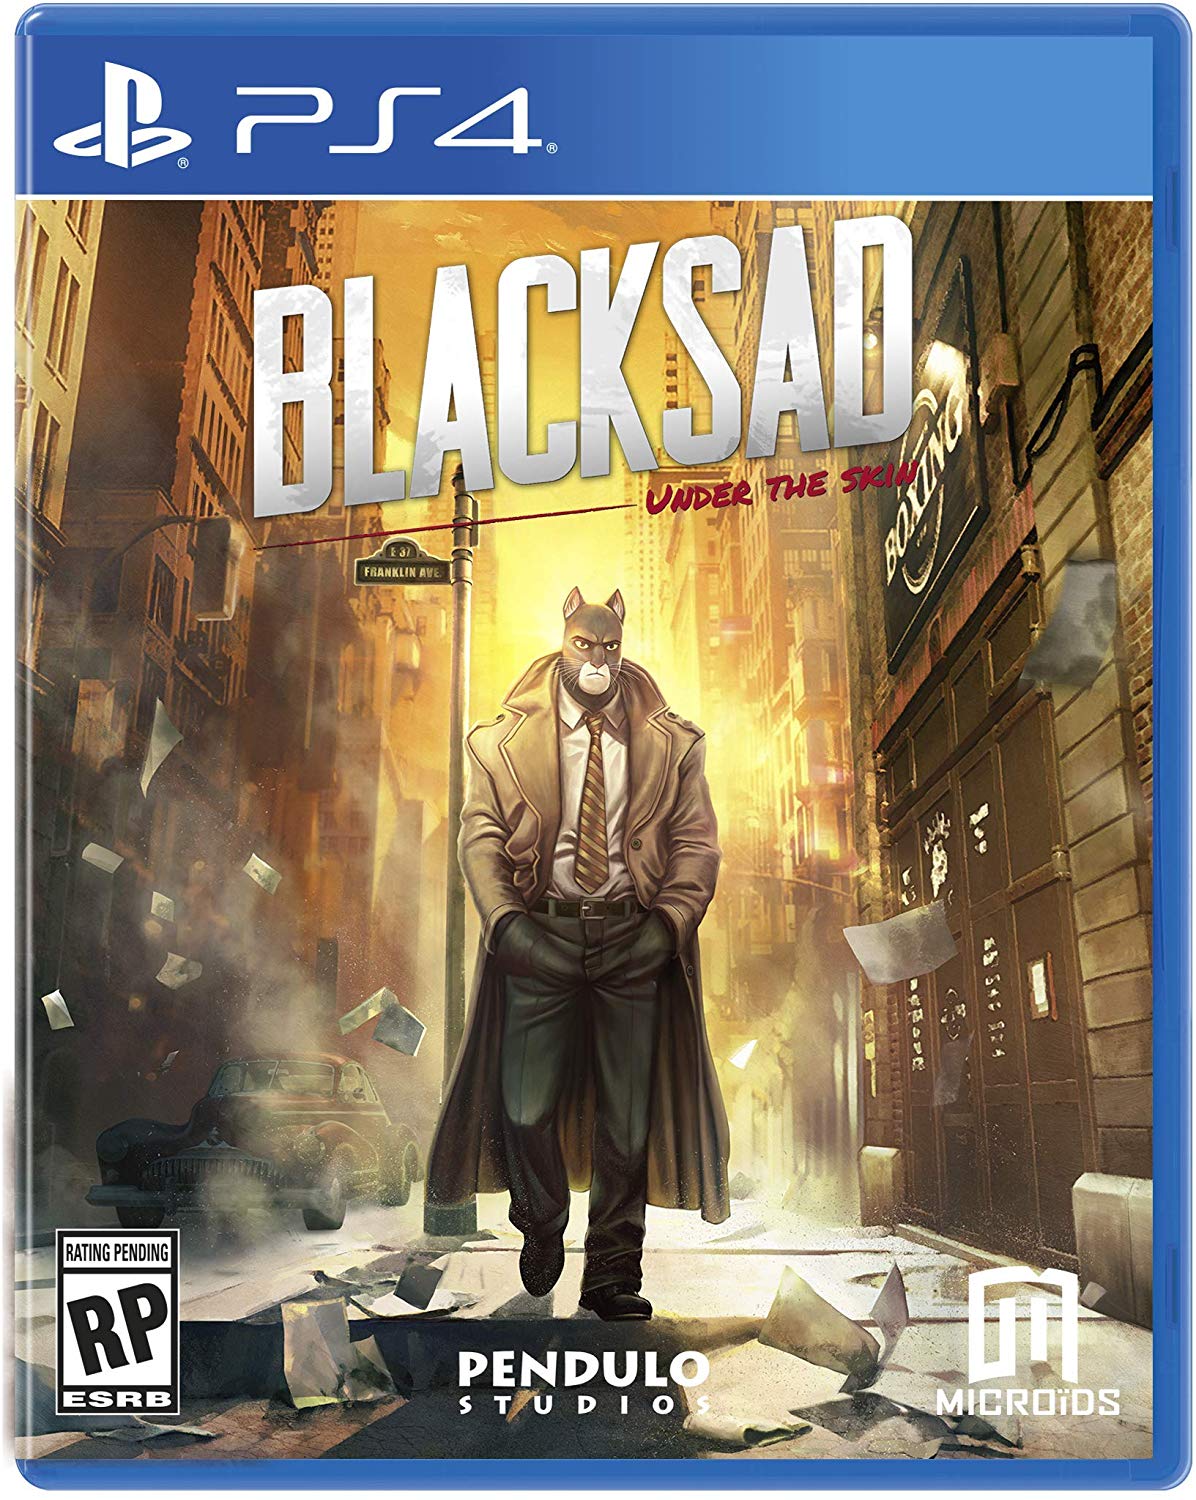 Blacksad: Under The Skin Limited Edition (PS4) - PlayStation 4 Video Games Maximum Games   